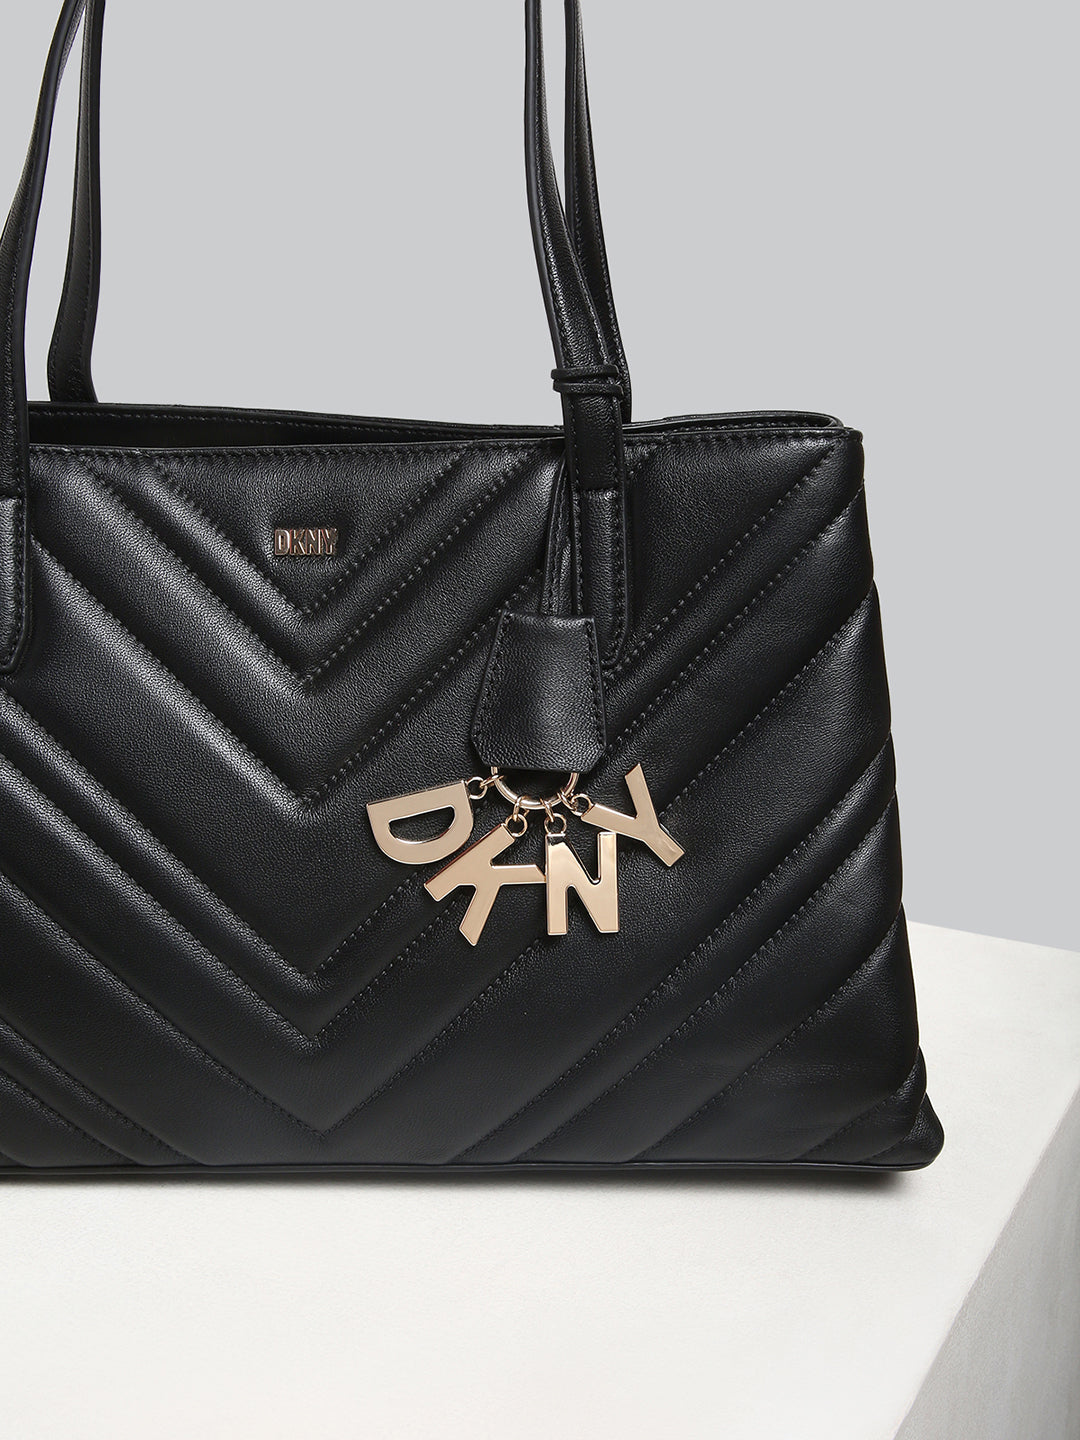 DKNY LOGO Brand New Classic Black Purse Handbag Zip Body Satchel 🎁🥰💫 |  eBay